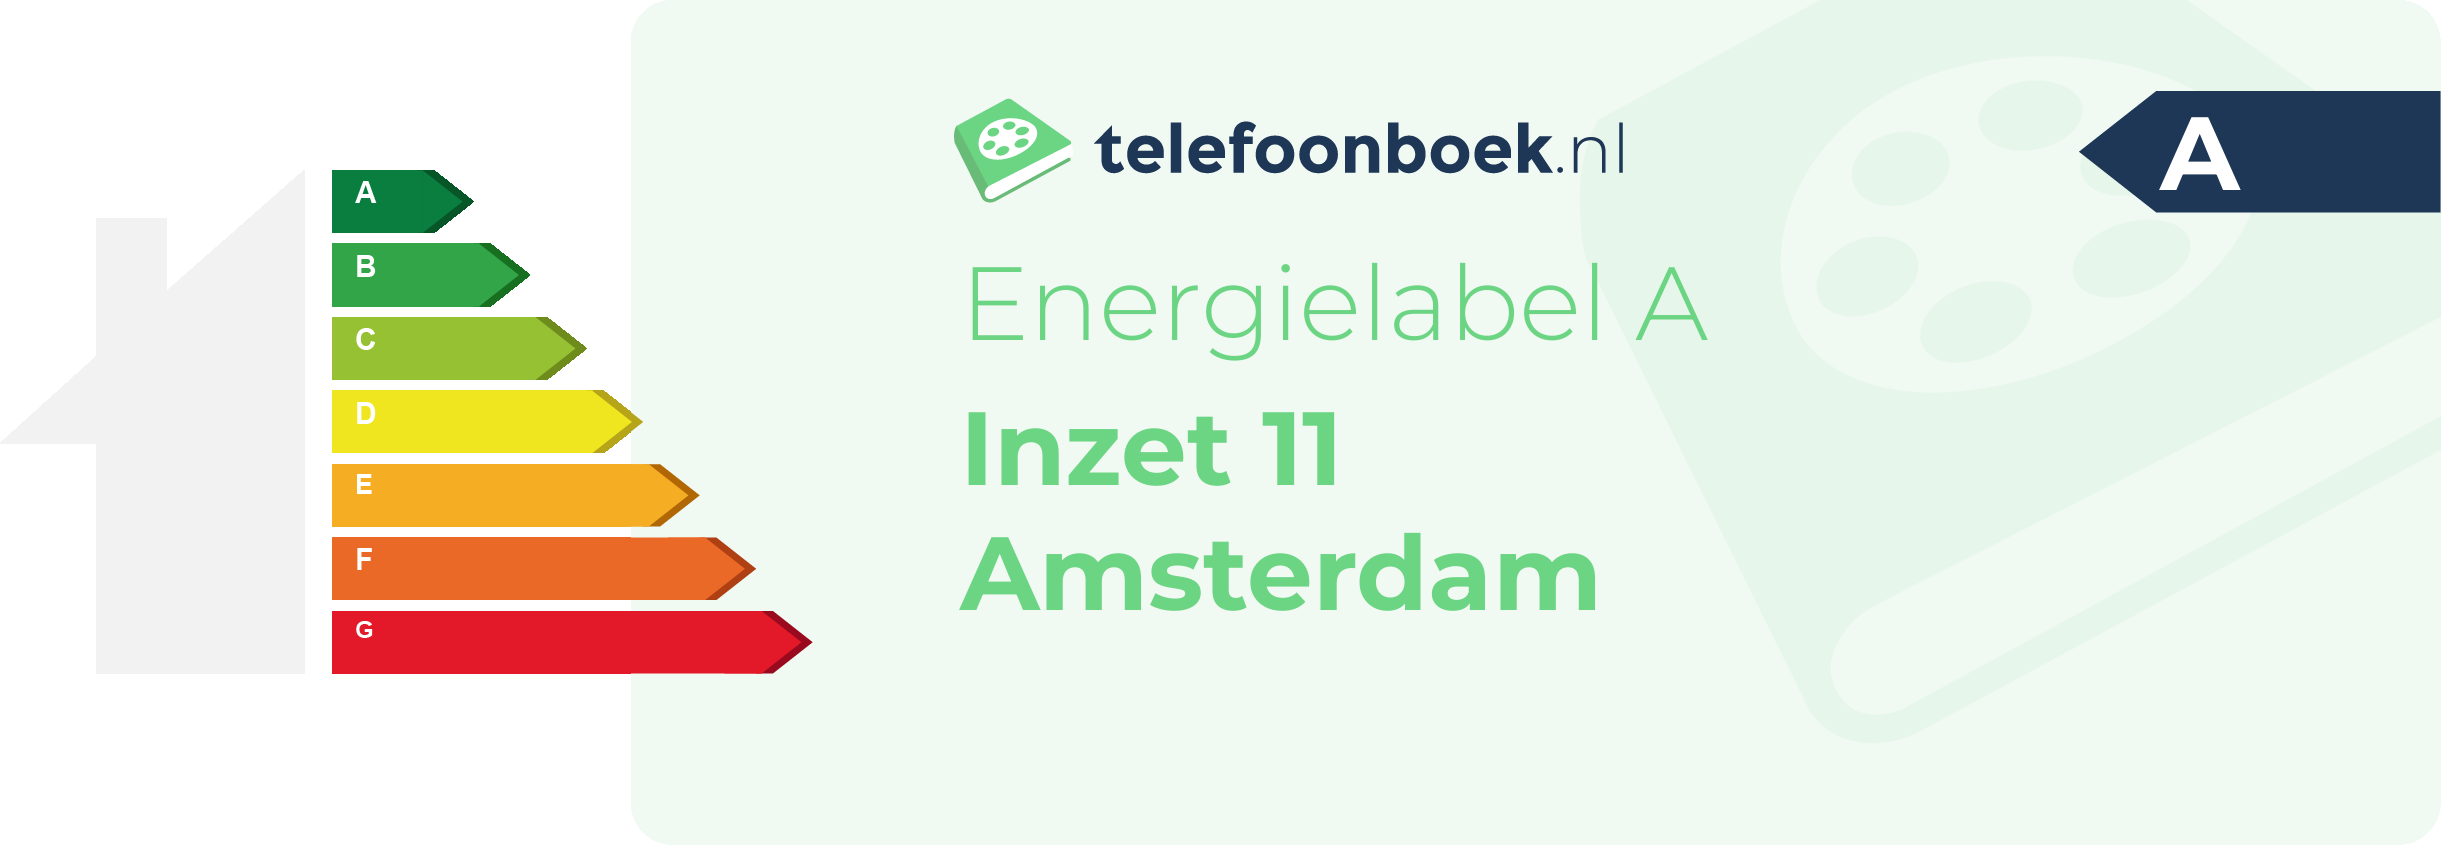 Energielabel Inzet 11 Amsterdam